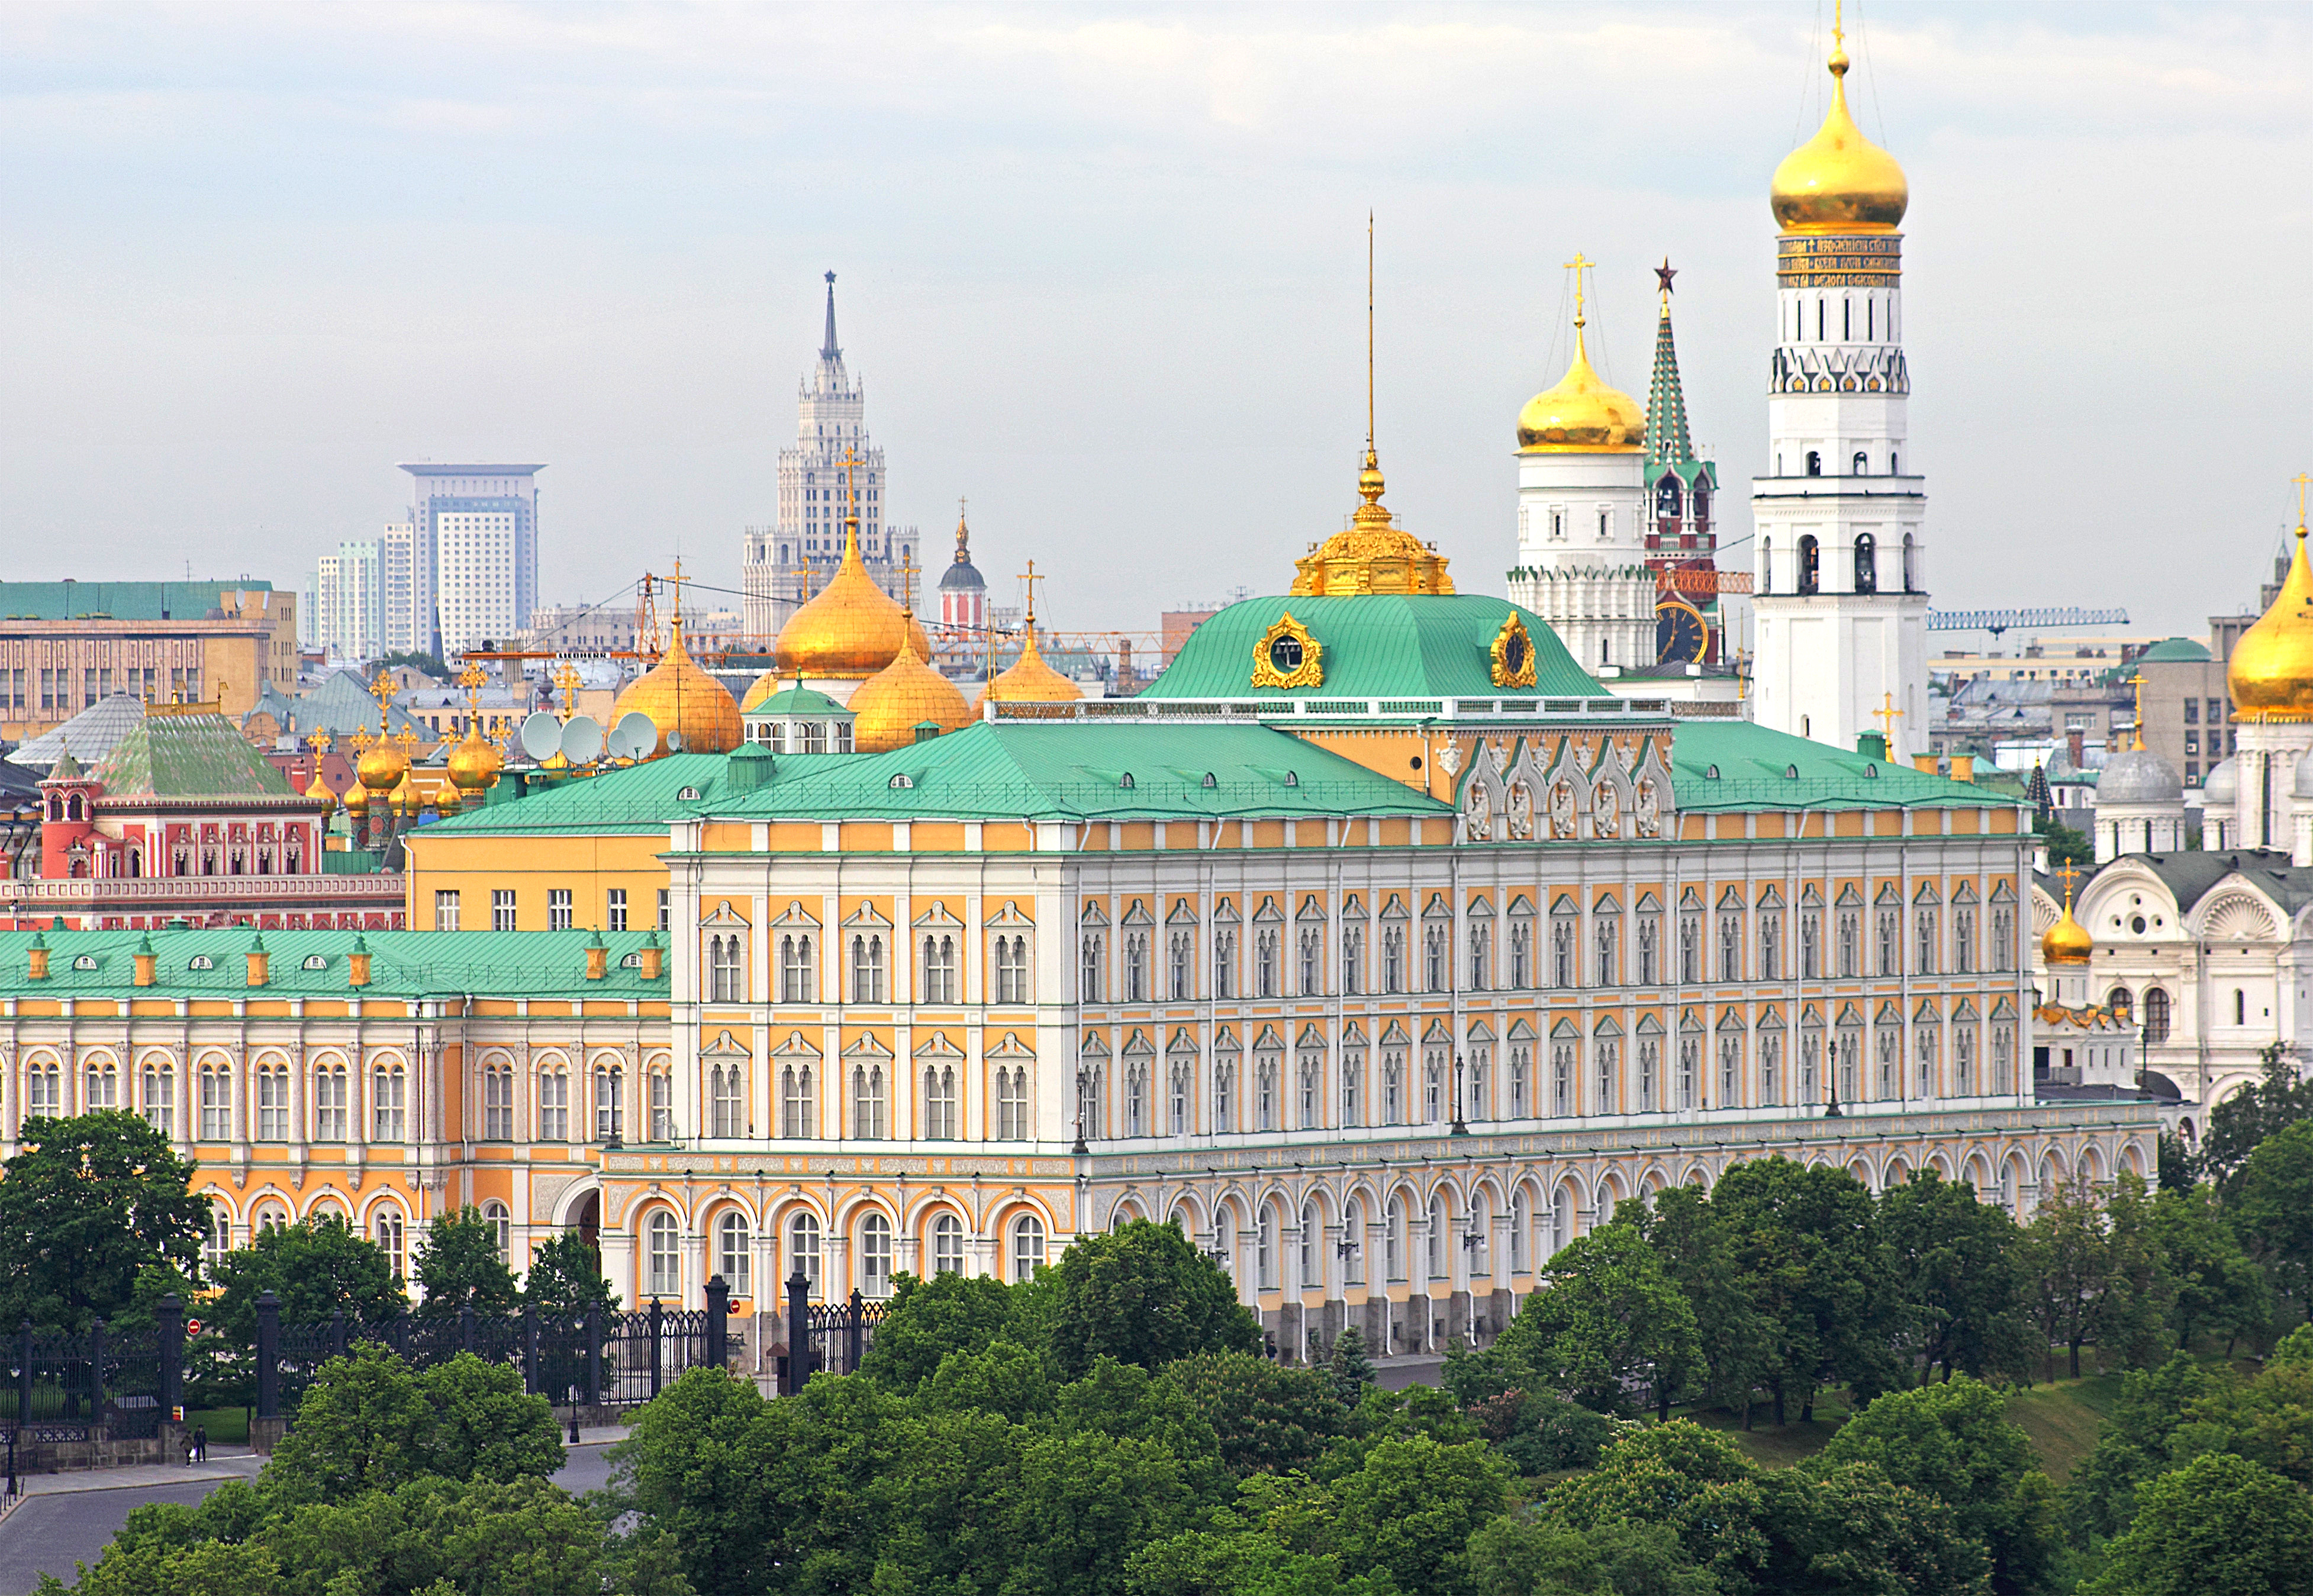 IMAGE(http://tour-moscow.com/wp-content/uploads/2014/10/The-Big-Kremlin-Palace.jpg)